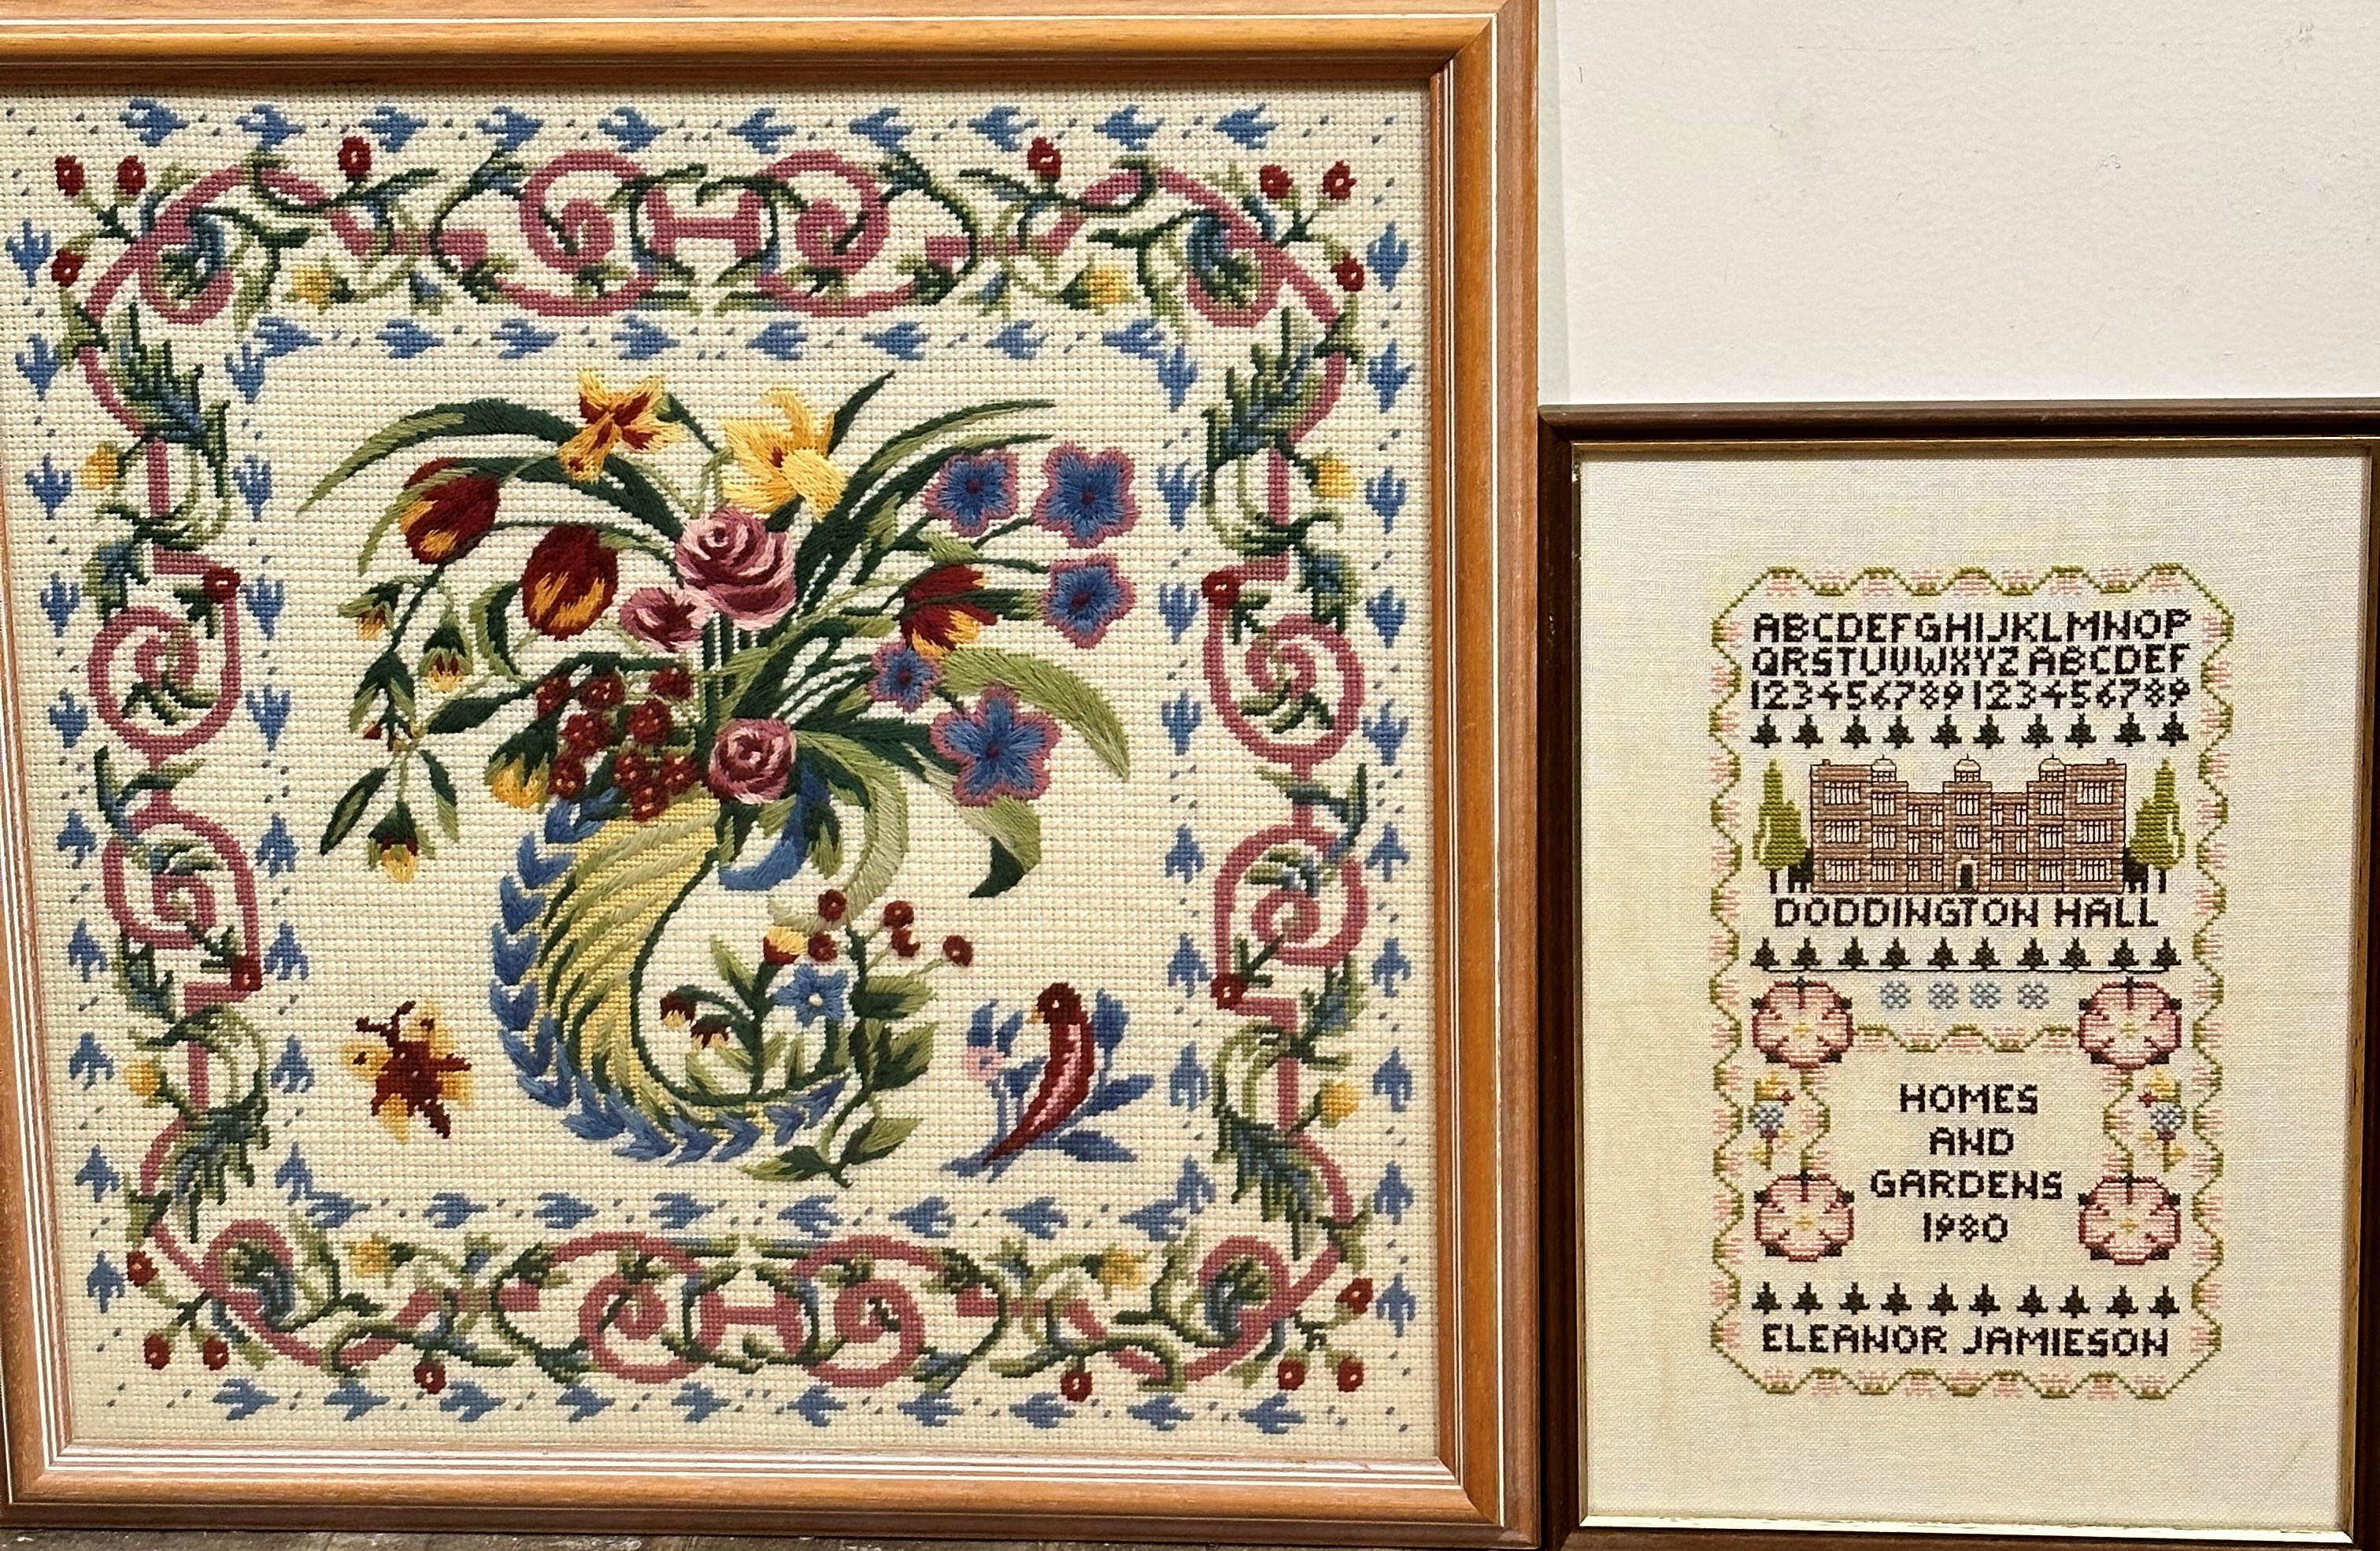 A sewn work sampler on linen with Doddington Hall Homes and Garden 1980, Eleanor Jamieson, oak